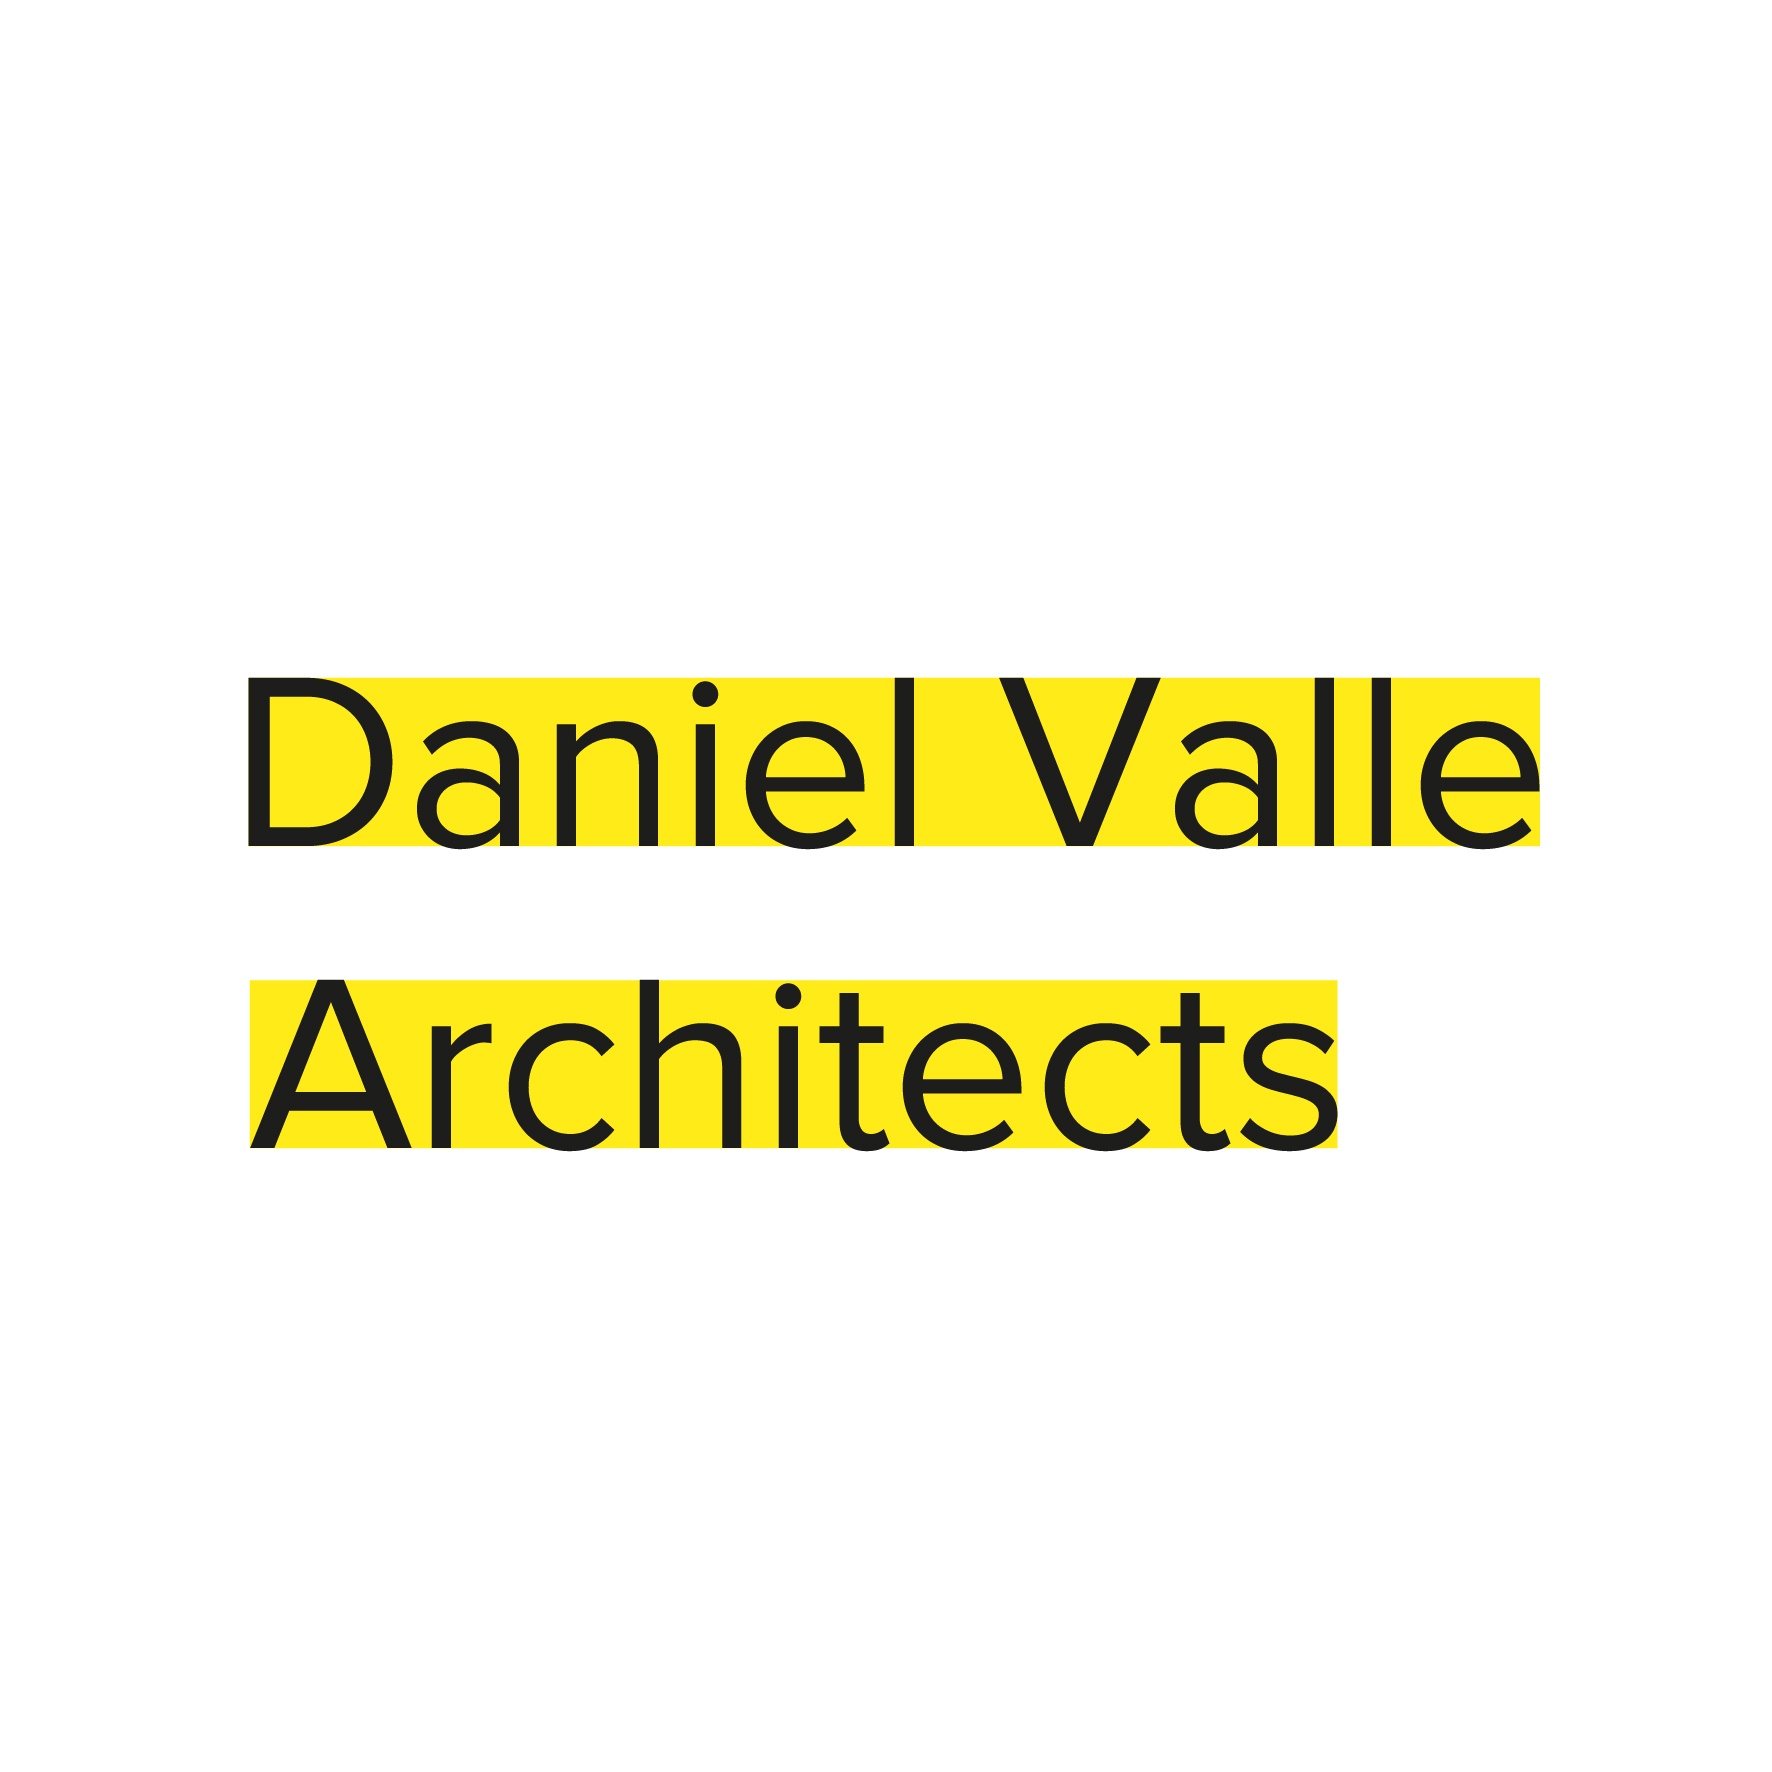 Daniel Valle Architects